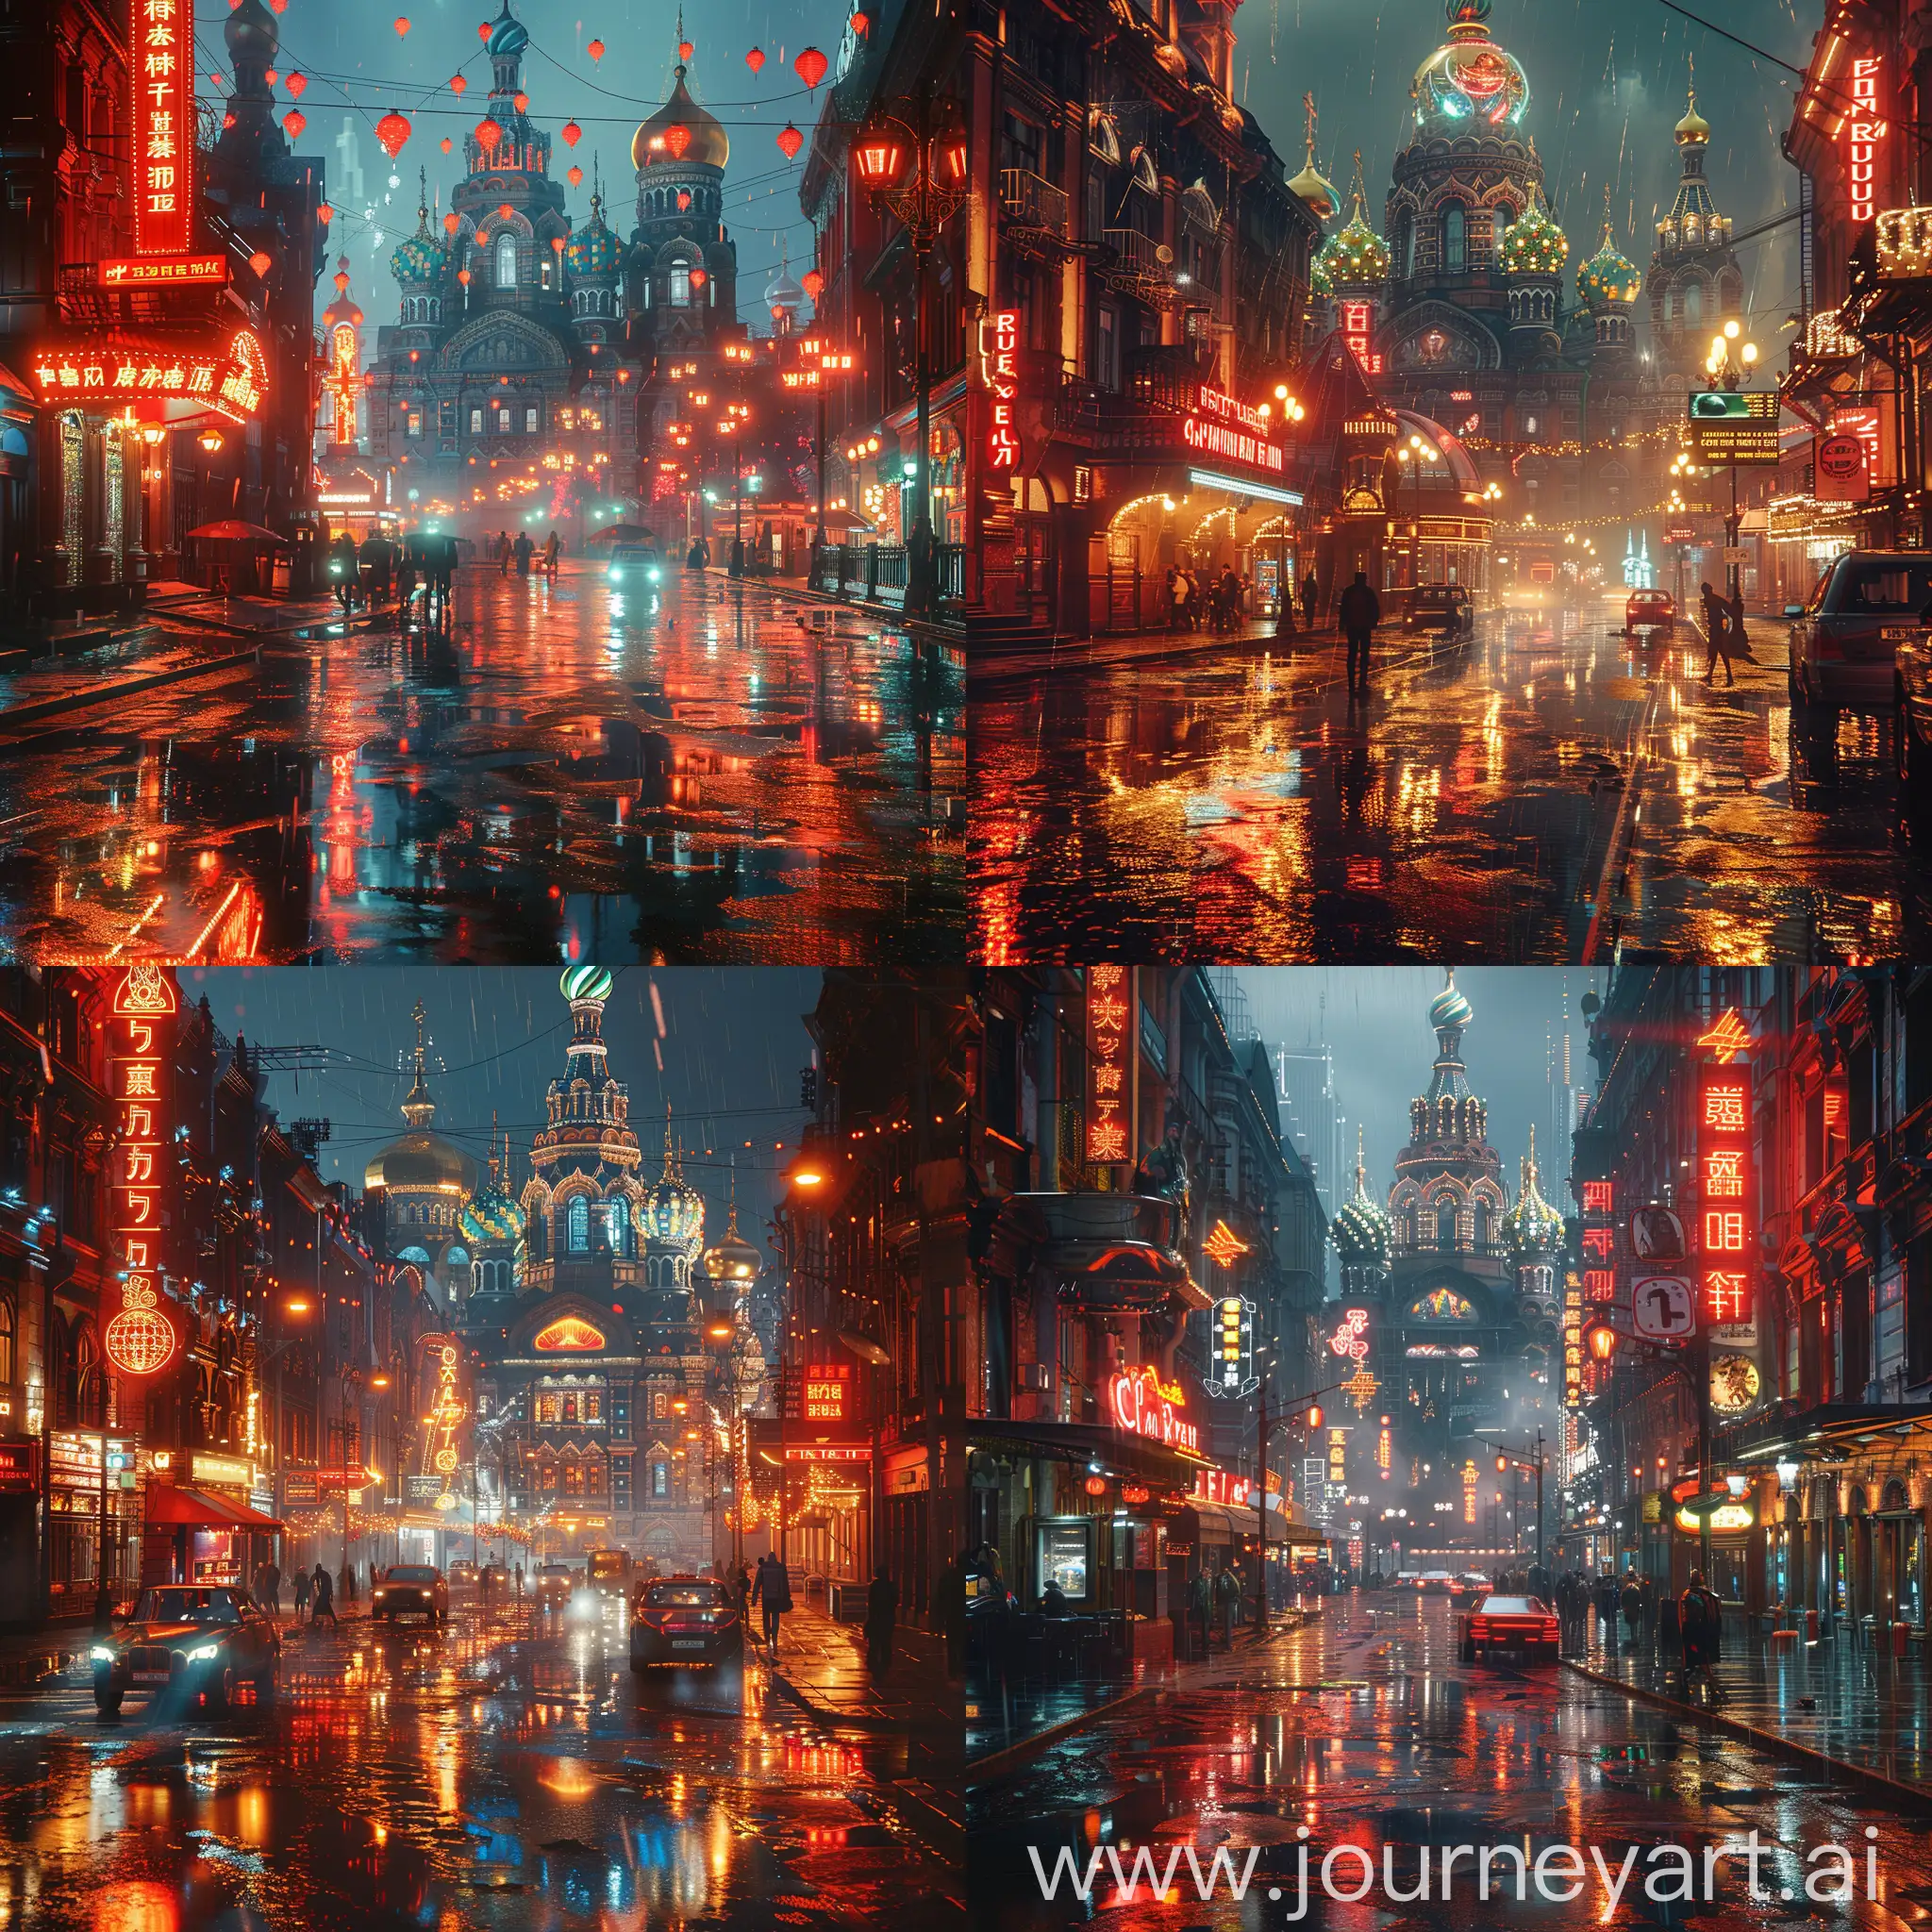 Hyperrealistic-Cyberpunk-Scene-in-Saint-Petersburg-with-Neon-Skyscrapers